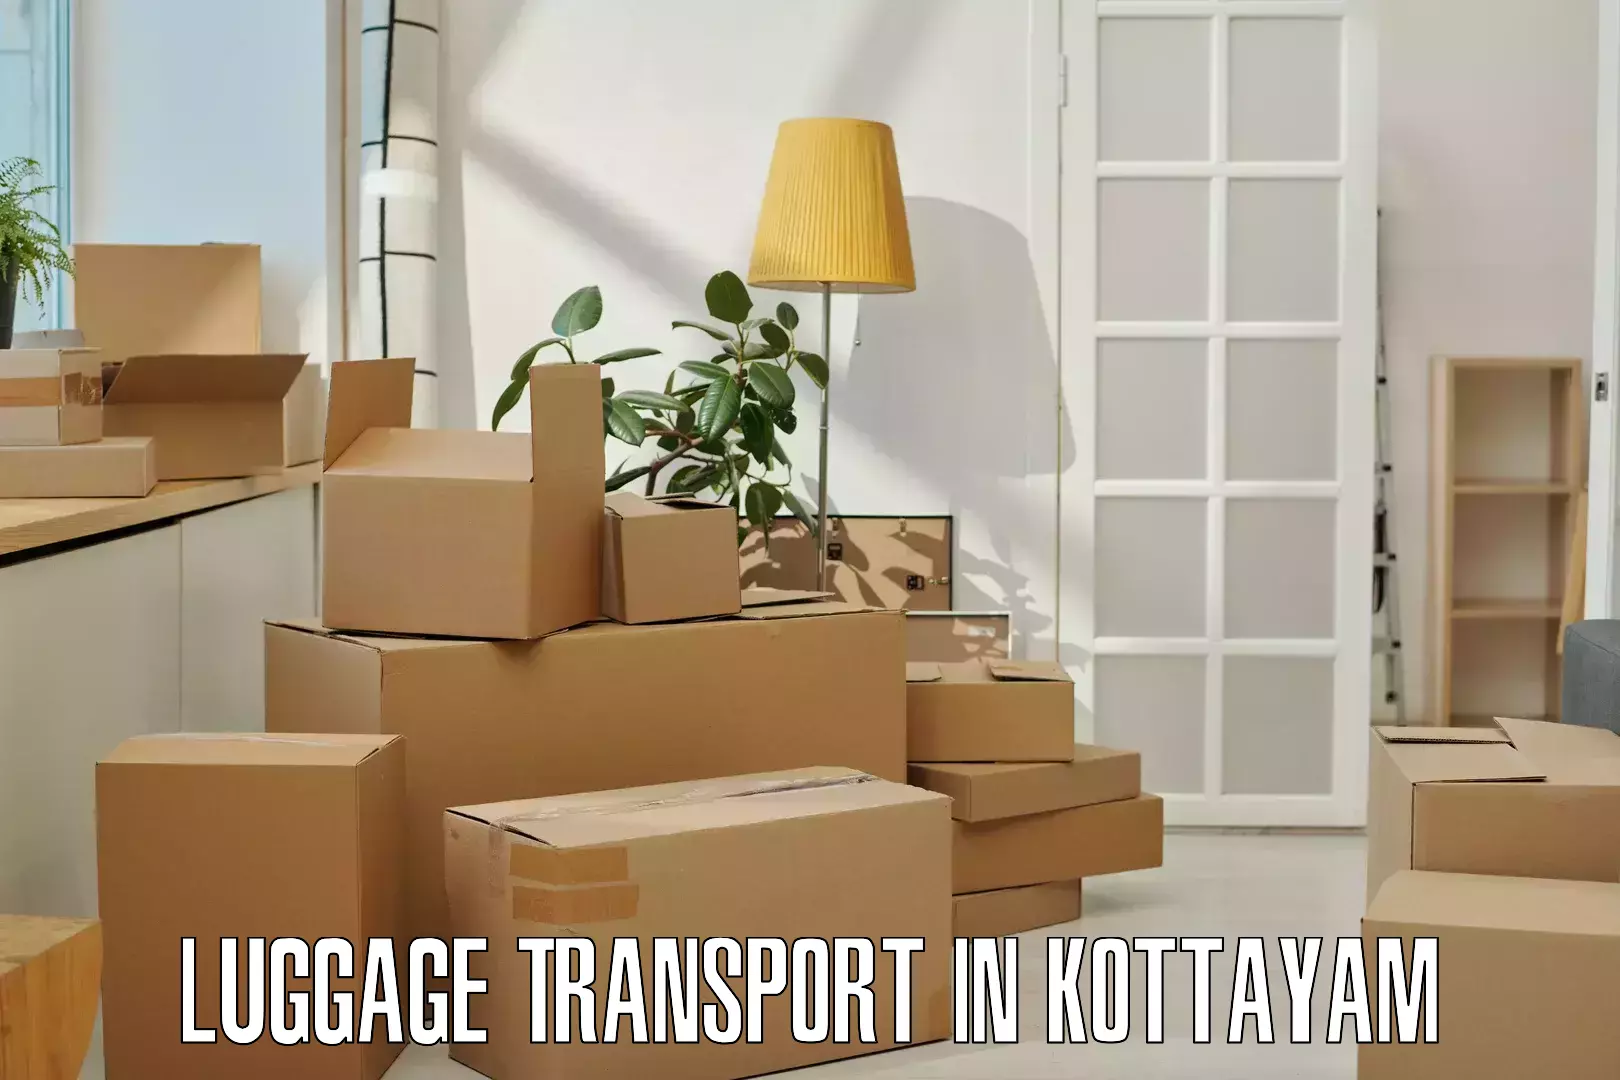 Efficient baggage transport in Kottayam